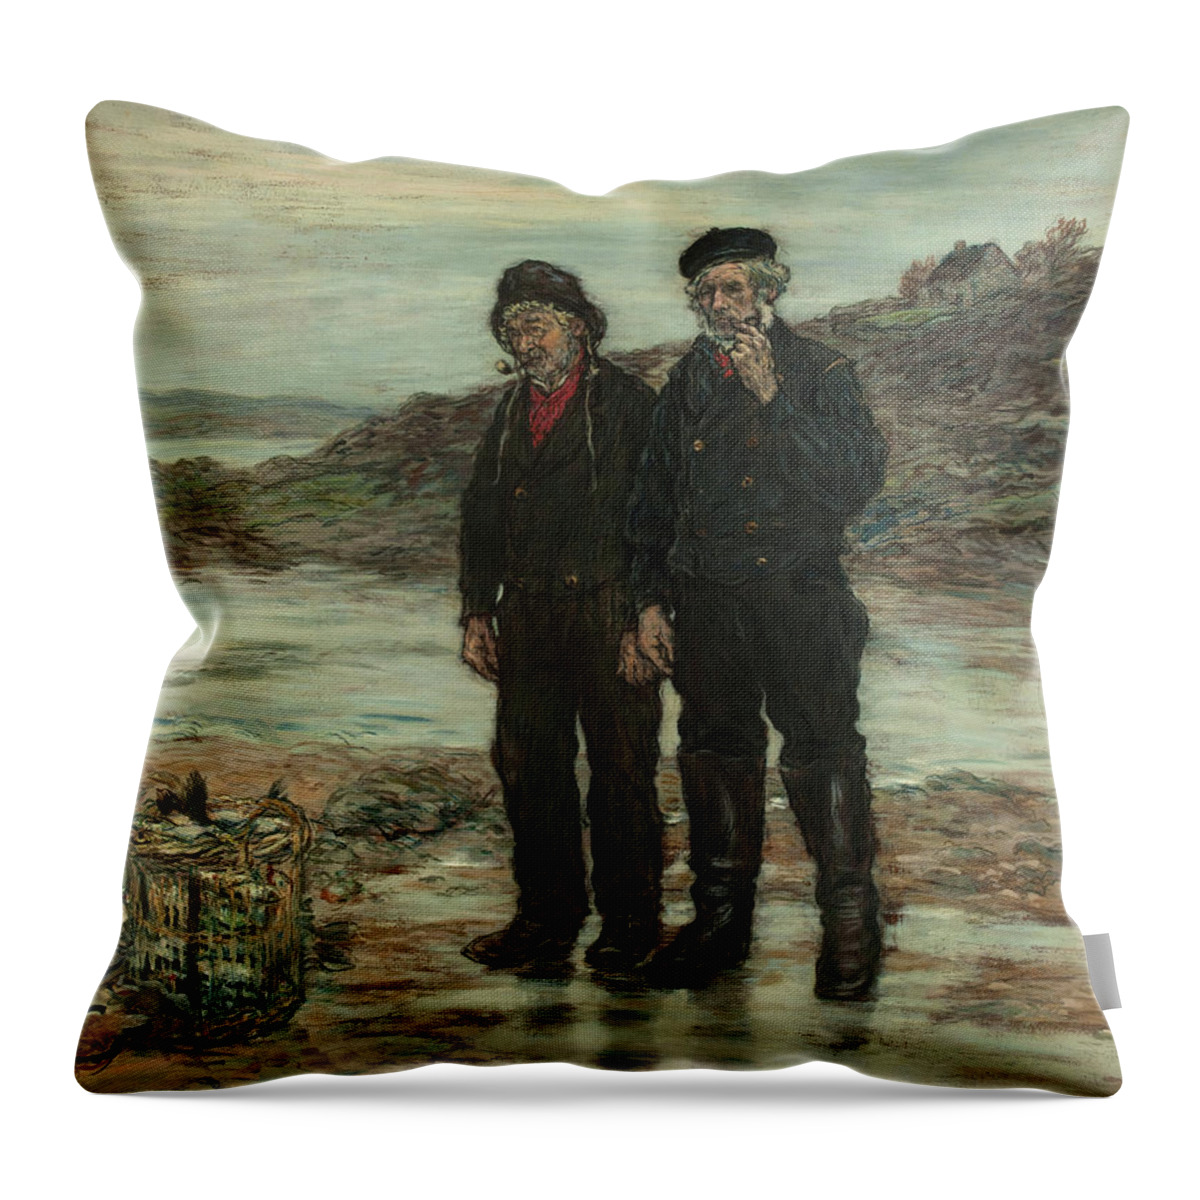 Fishermen Of Scotland Throw Pillow featuring the painting Fishermen of Scotland by Jean-Francois Raffaelli